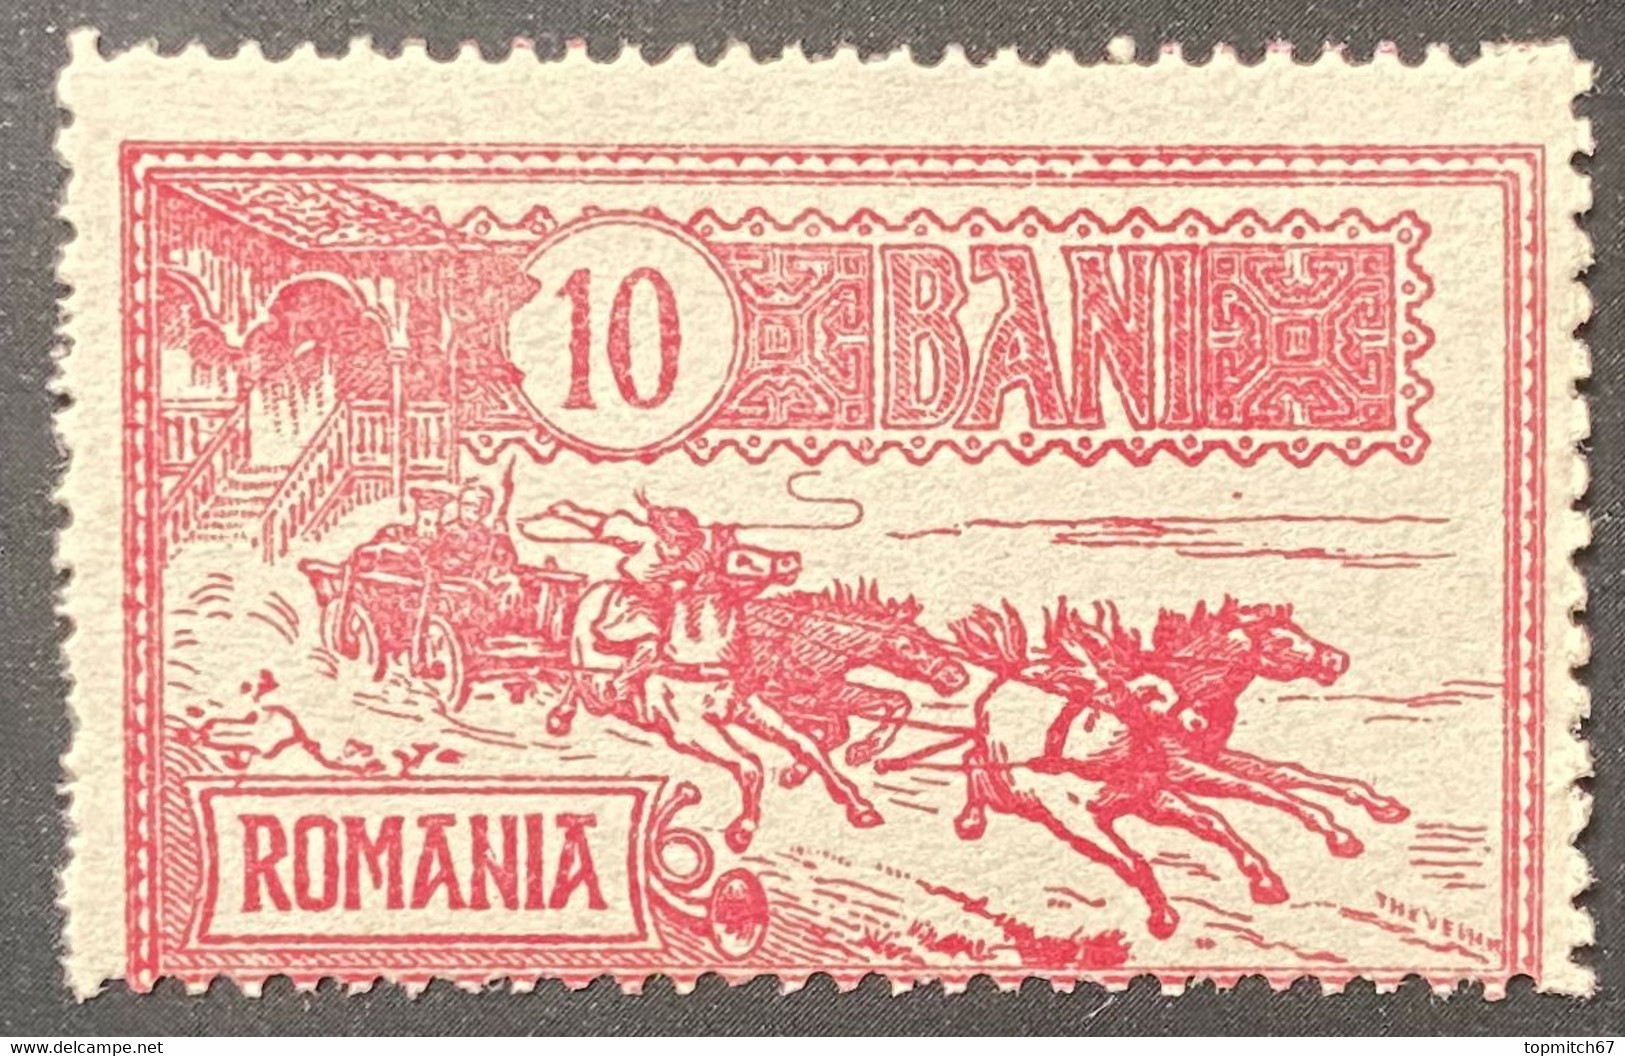 ROM0140MNH - Mail Coach - 10 Bani MNH Stamp - Romania - 1903 - Unused Stamps